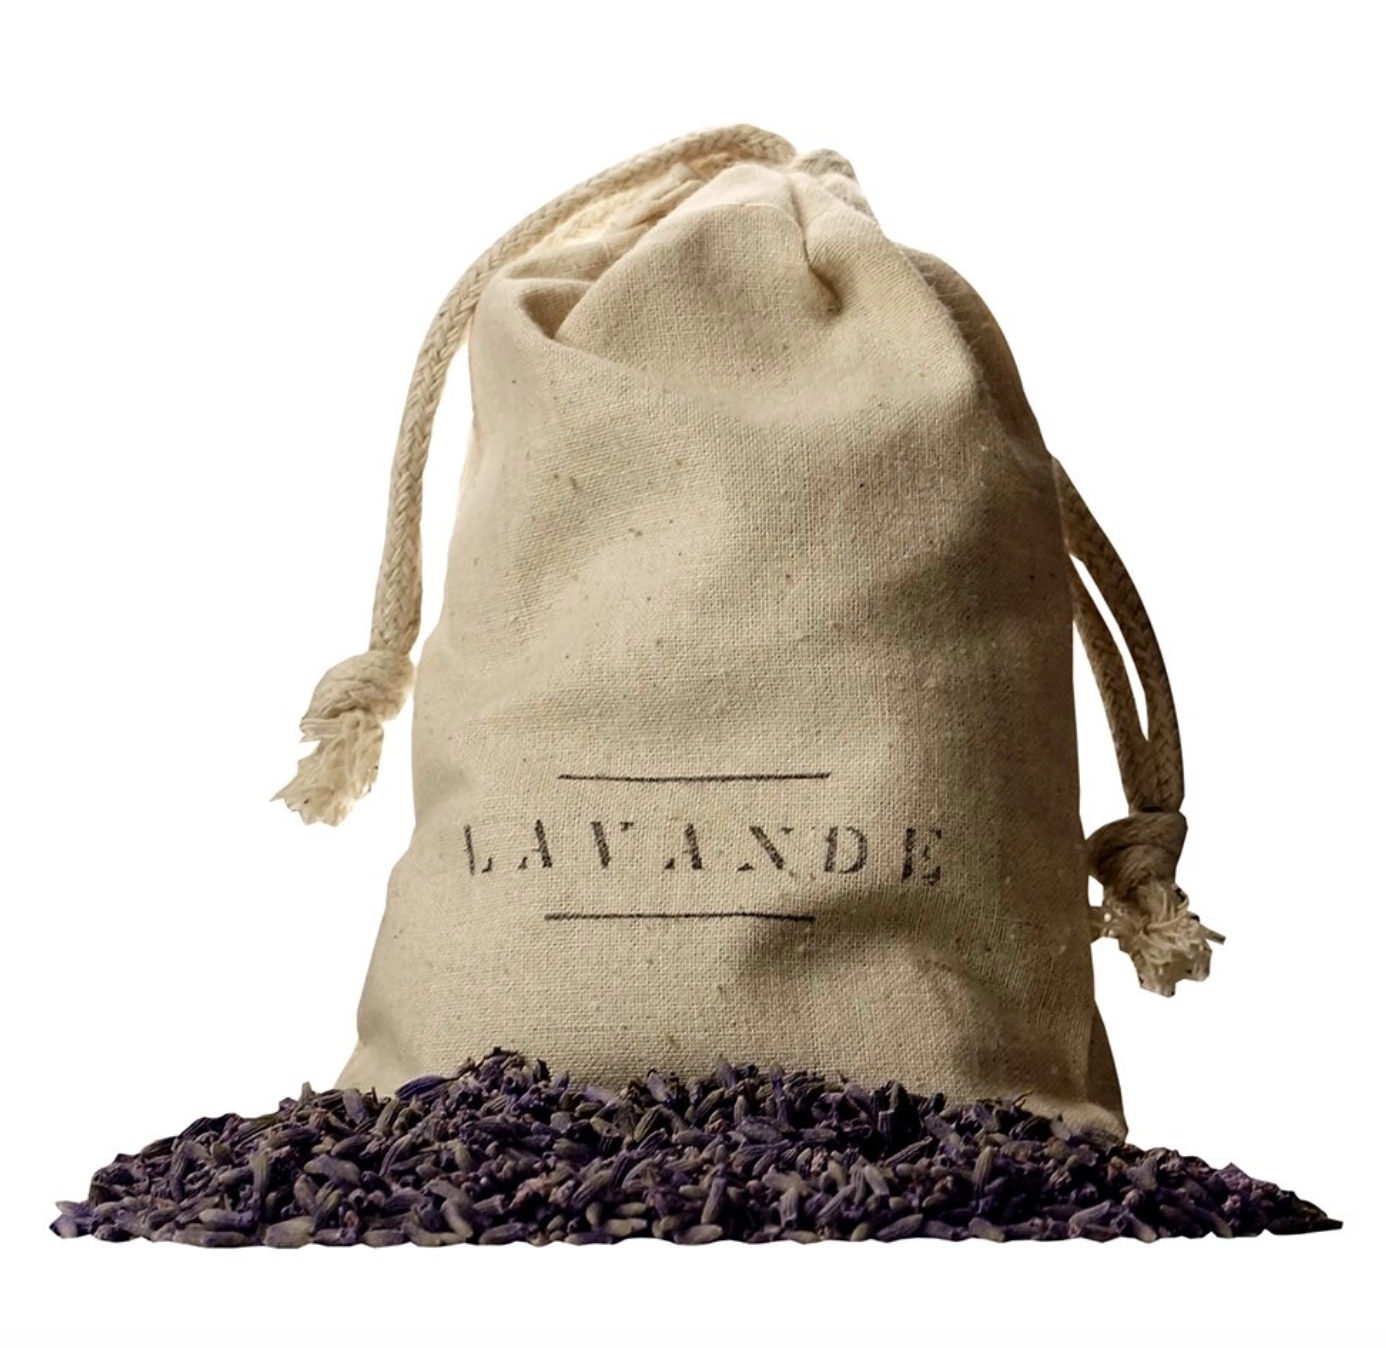 Lavender Bud Sachet by Lavande